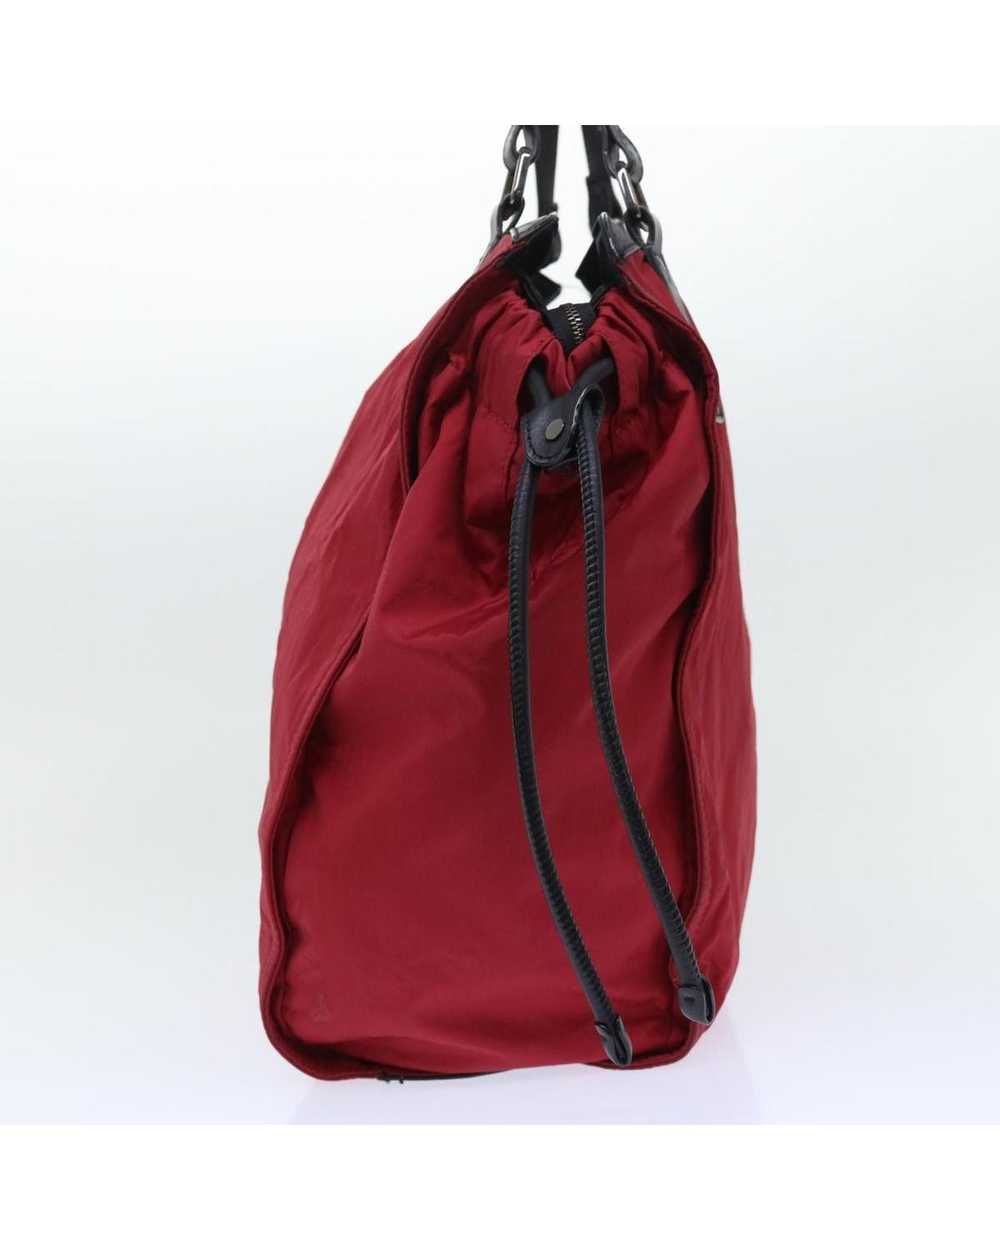 Burberry Red Nylon Leather Shoulder Bag - image 3